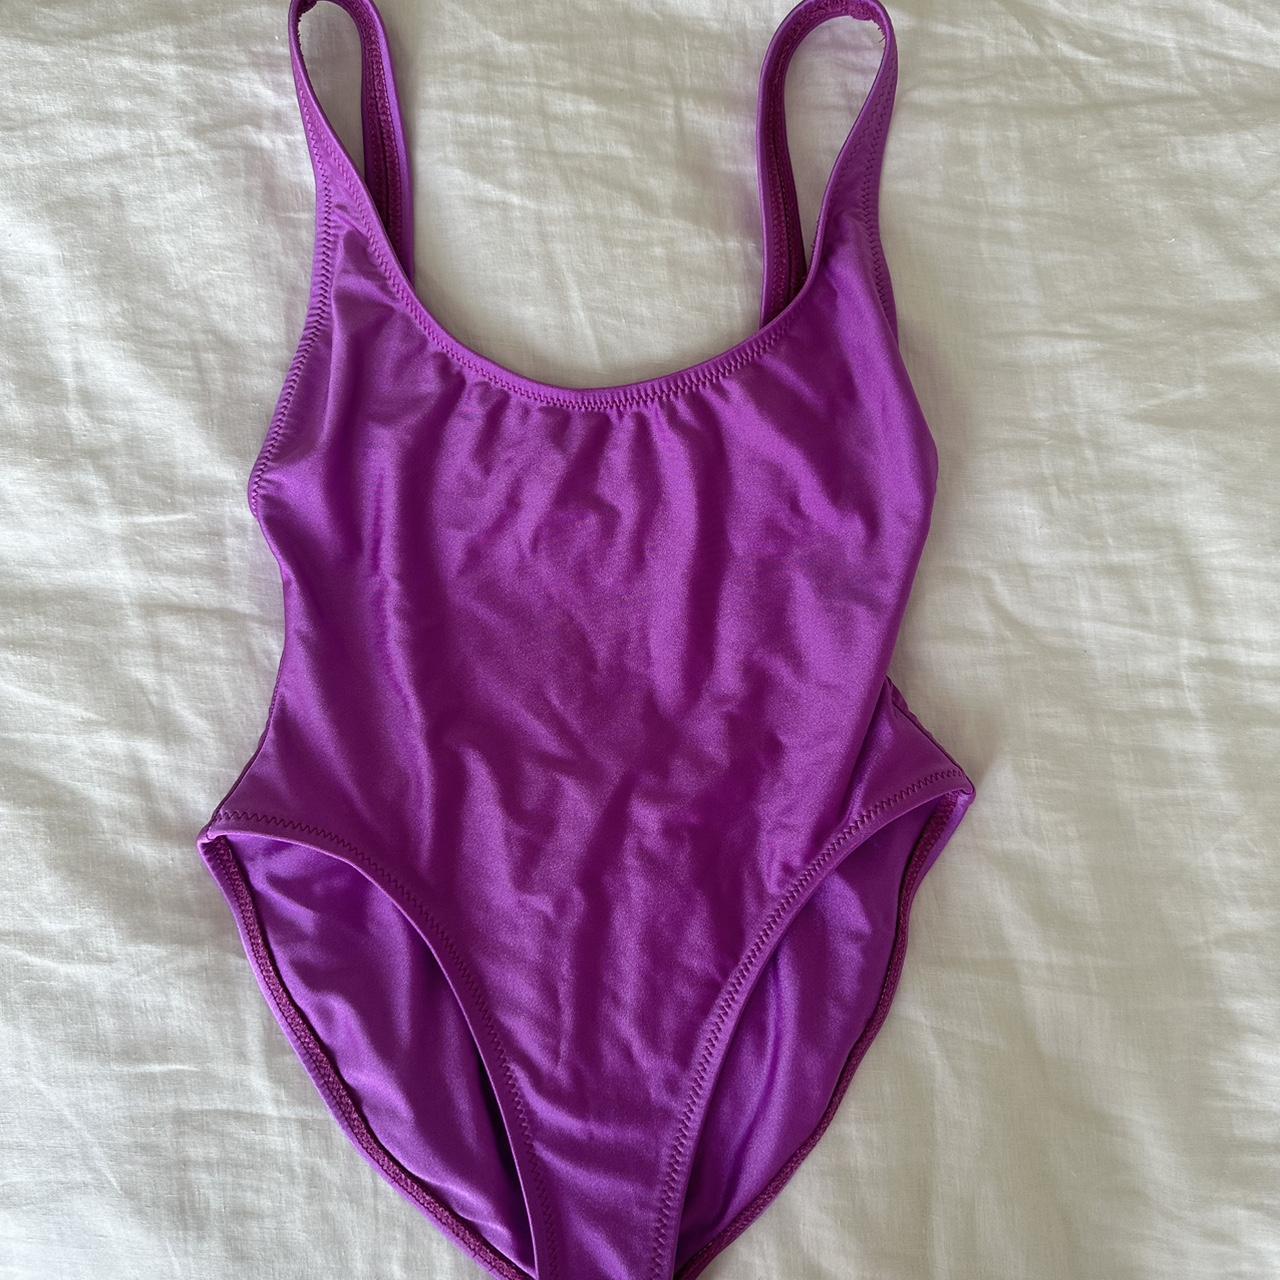 Lovewave bright purple one piece swimsuit - Depop